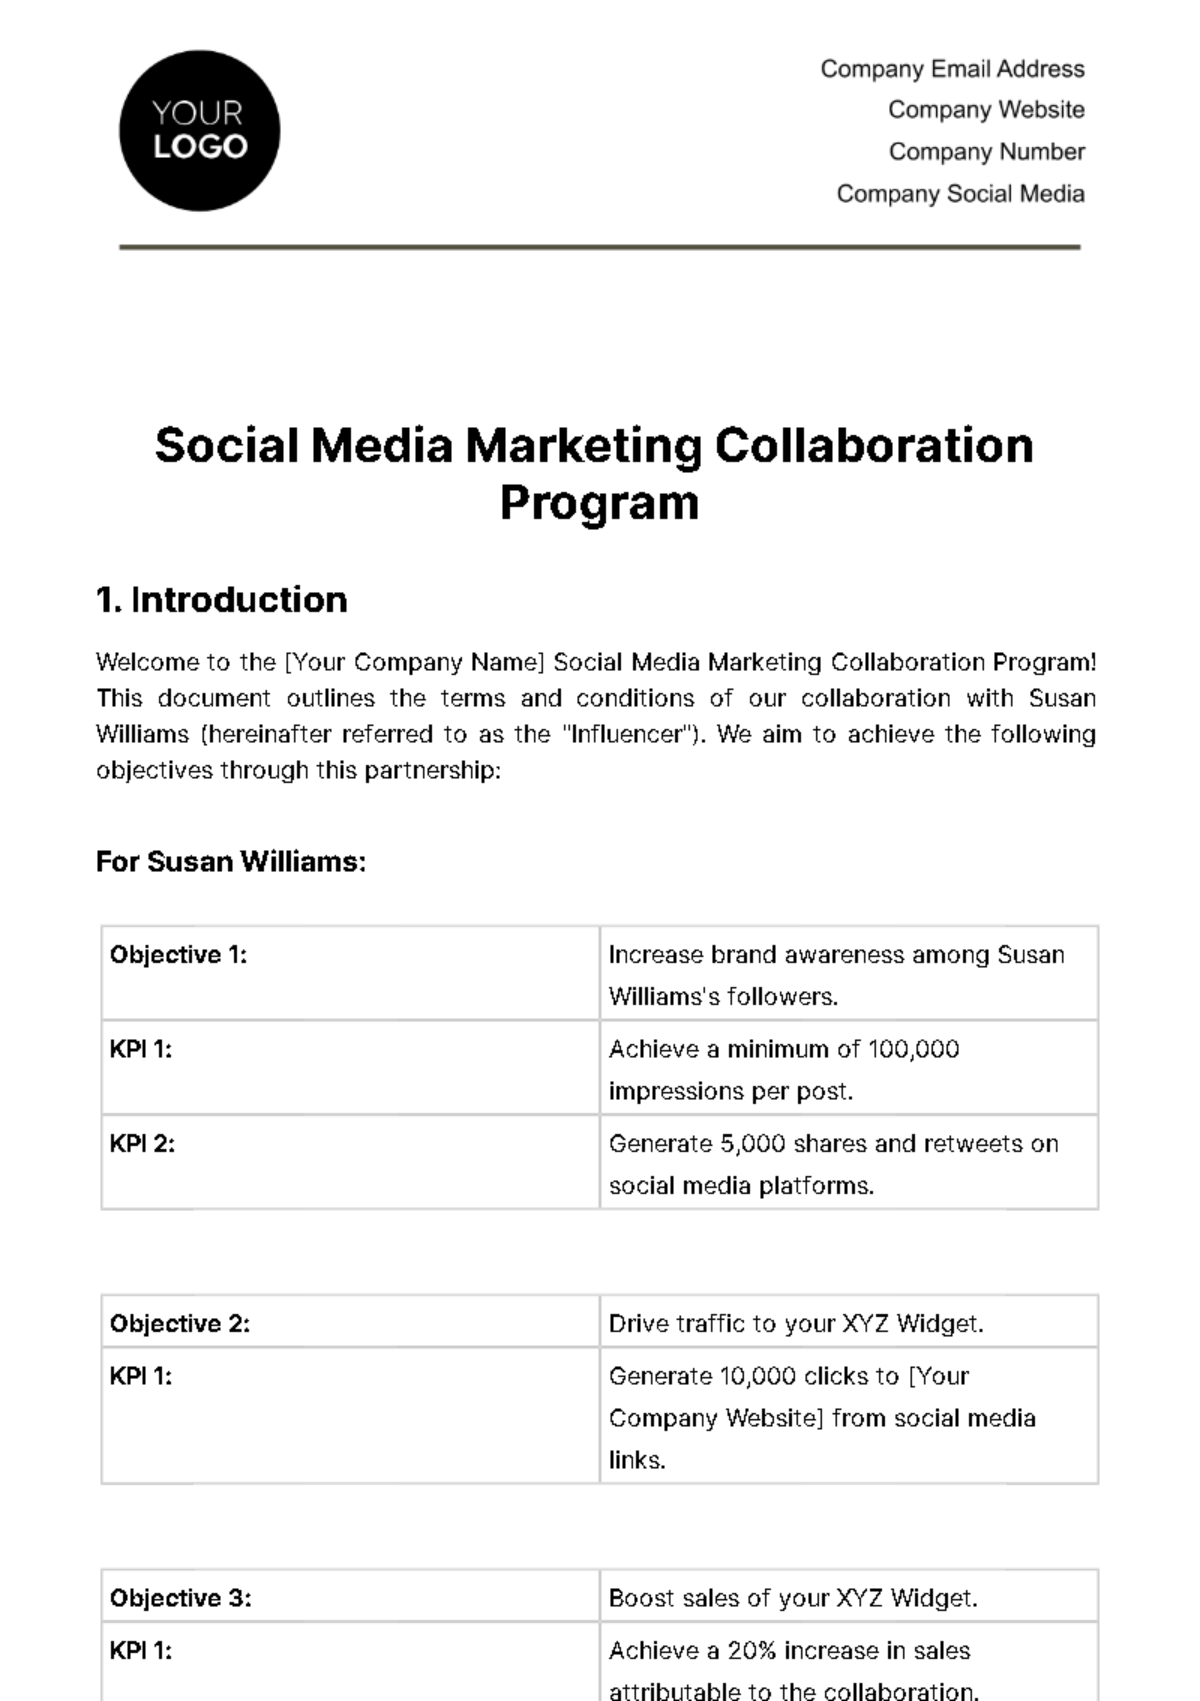 Free Social Media Marketing Collaboration Program Template